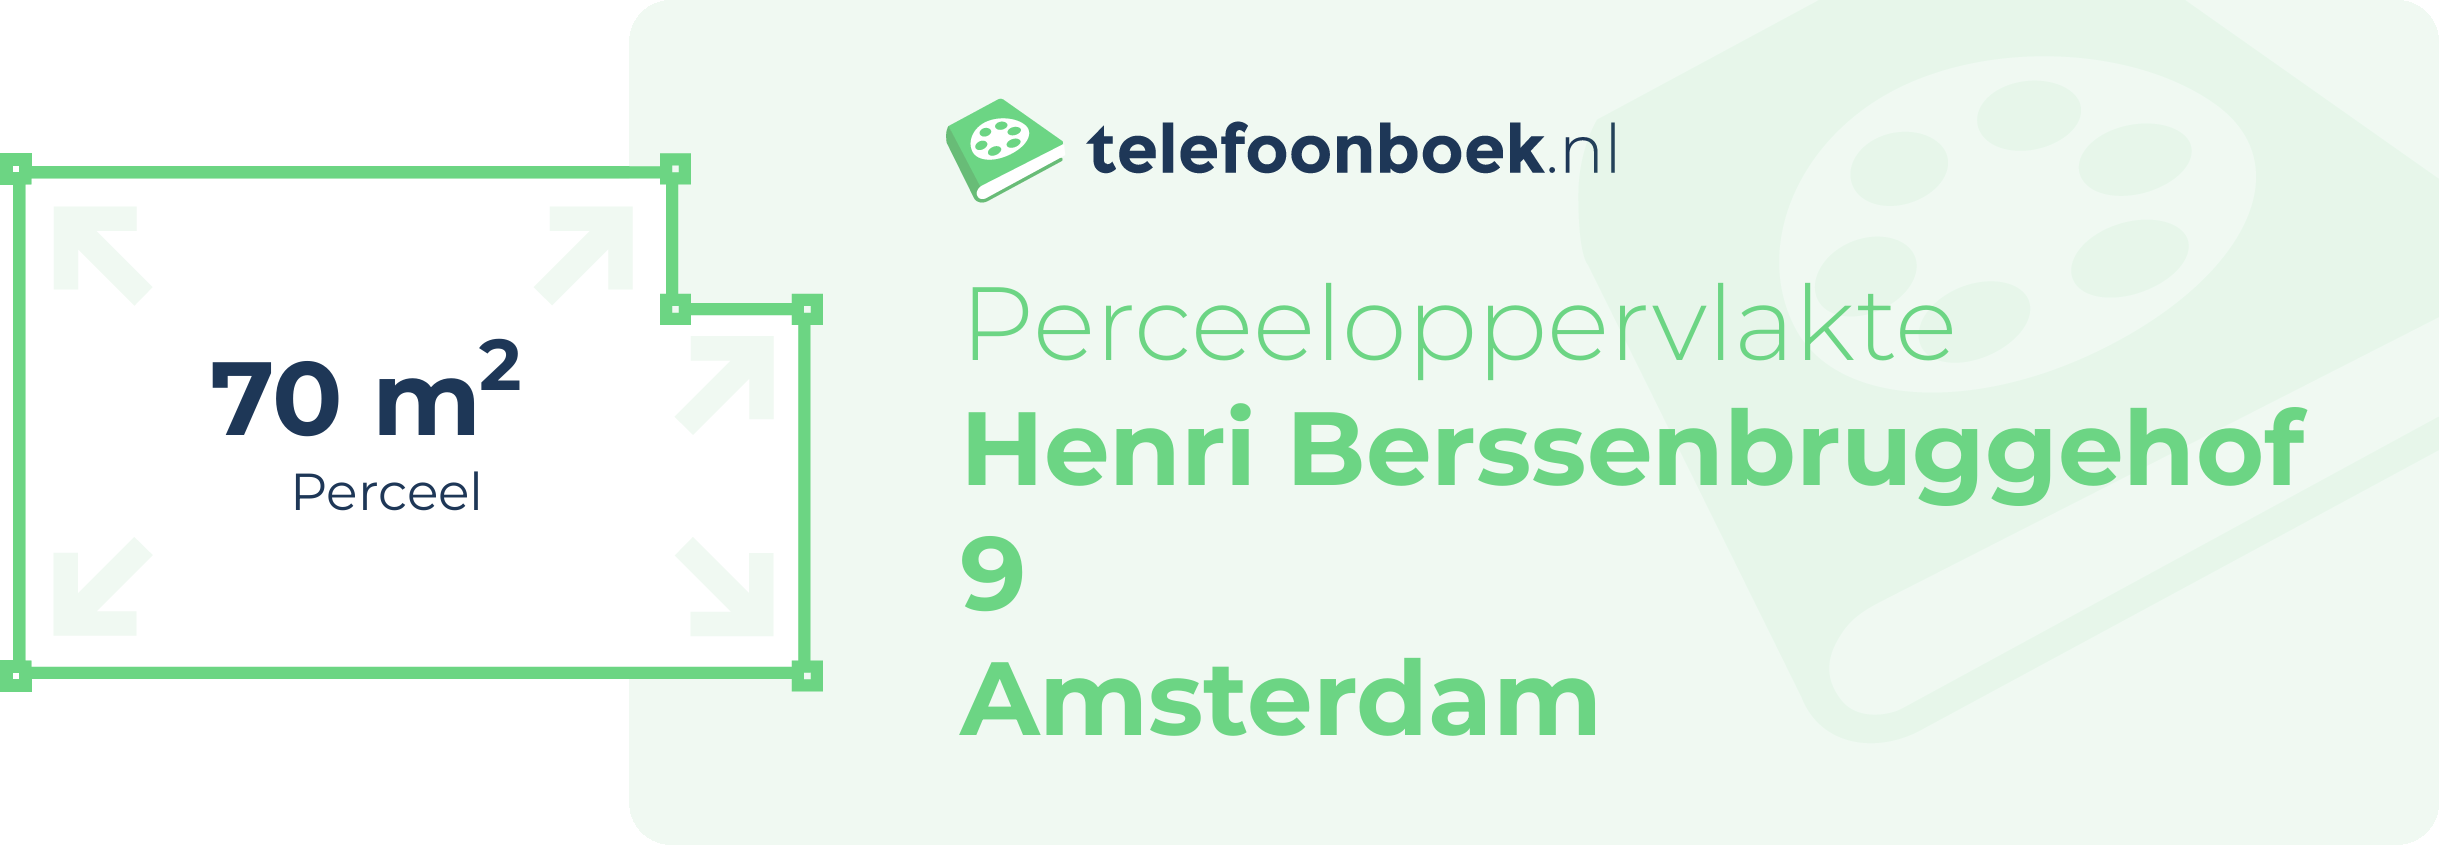 Perceeloppervlakte Henri Berssenbruggehof 9 Amsterdam